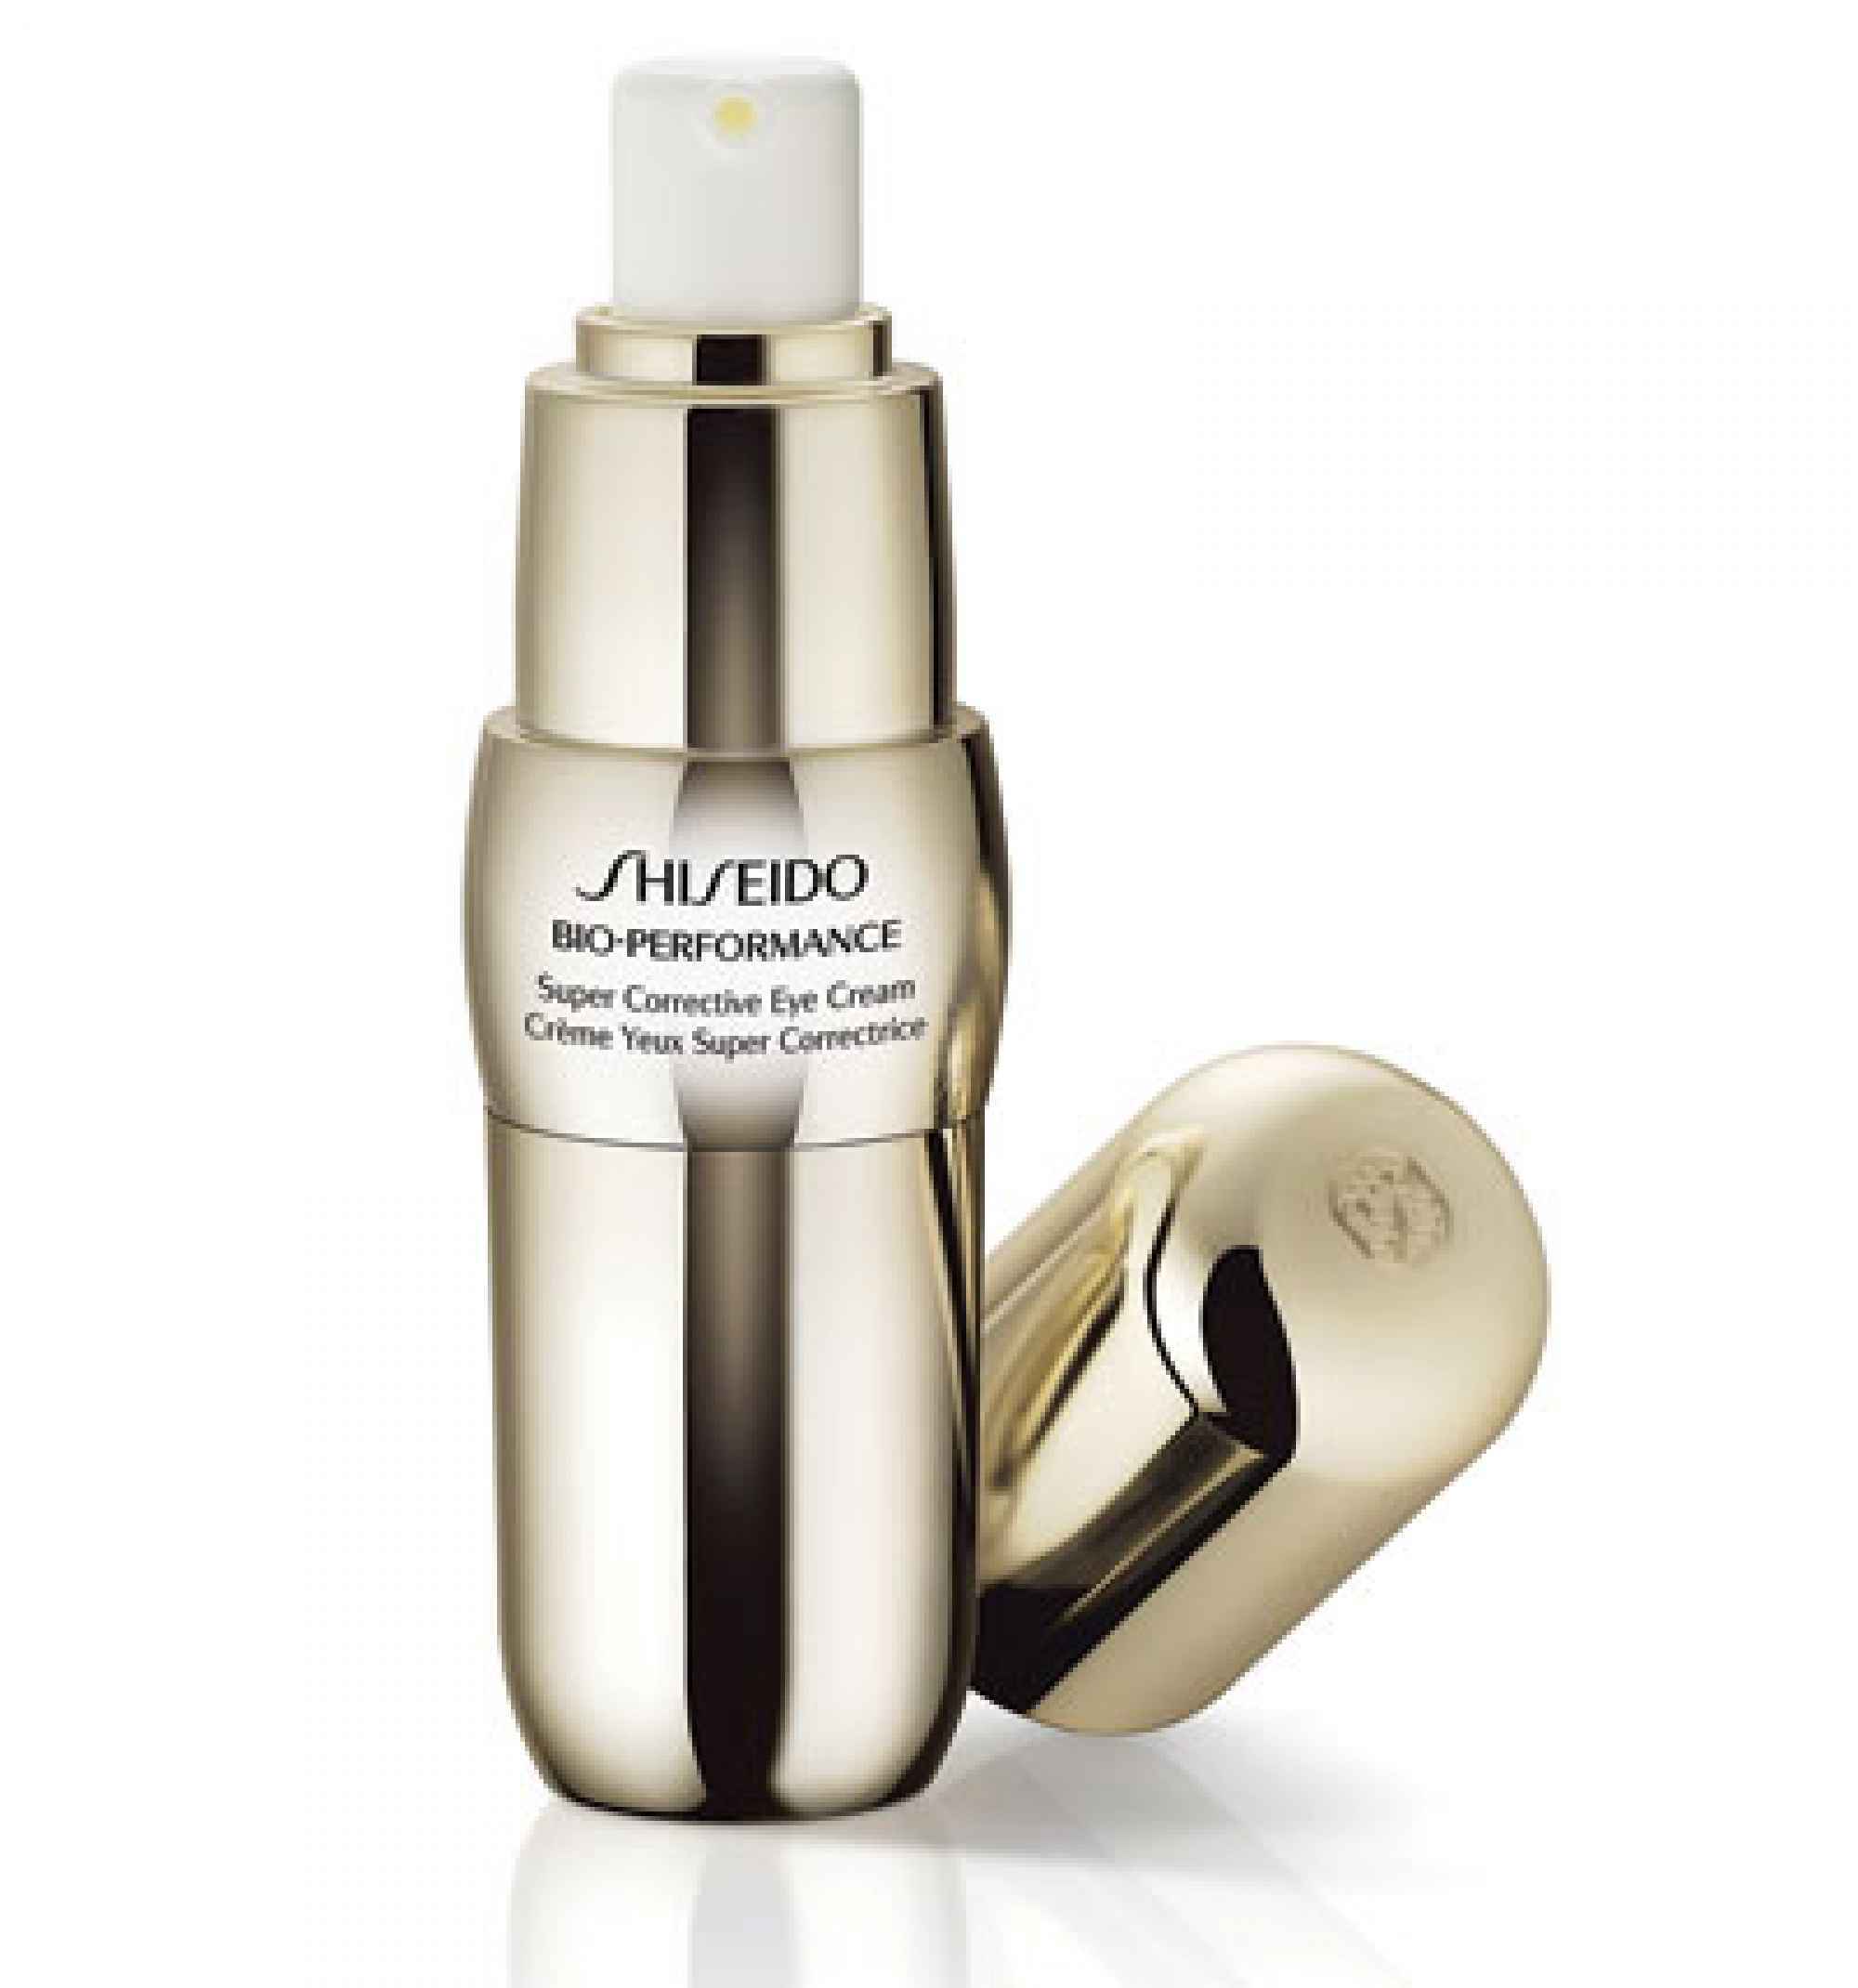 Kem chống lão hóa vùng mắt Shiseido Bio-Performance Super Corrective Eye Cream